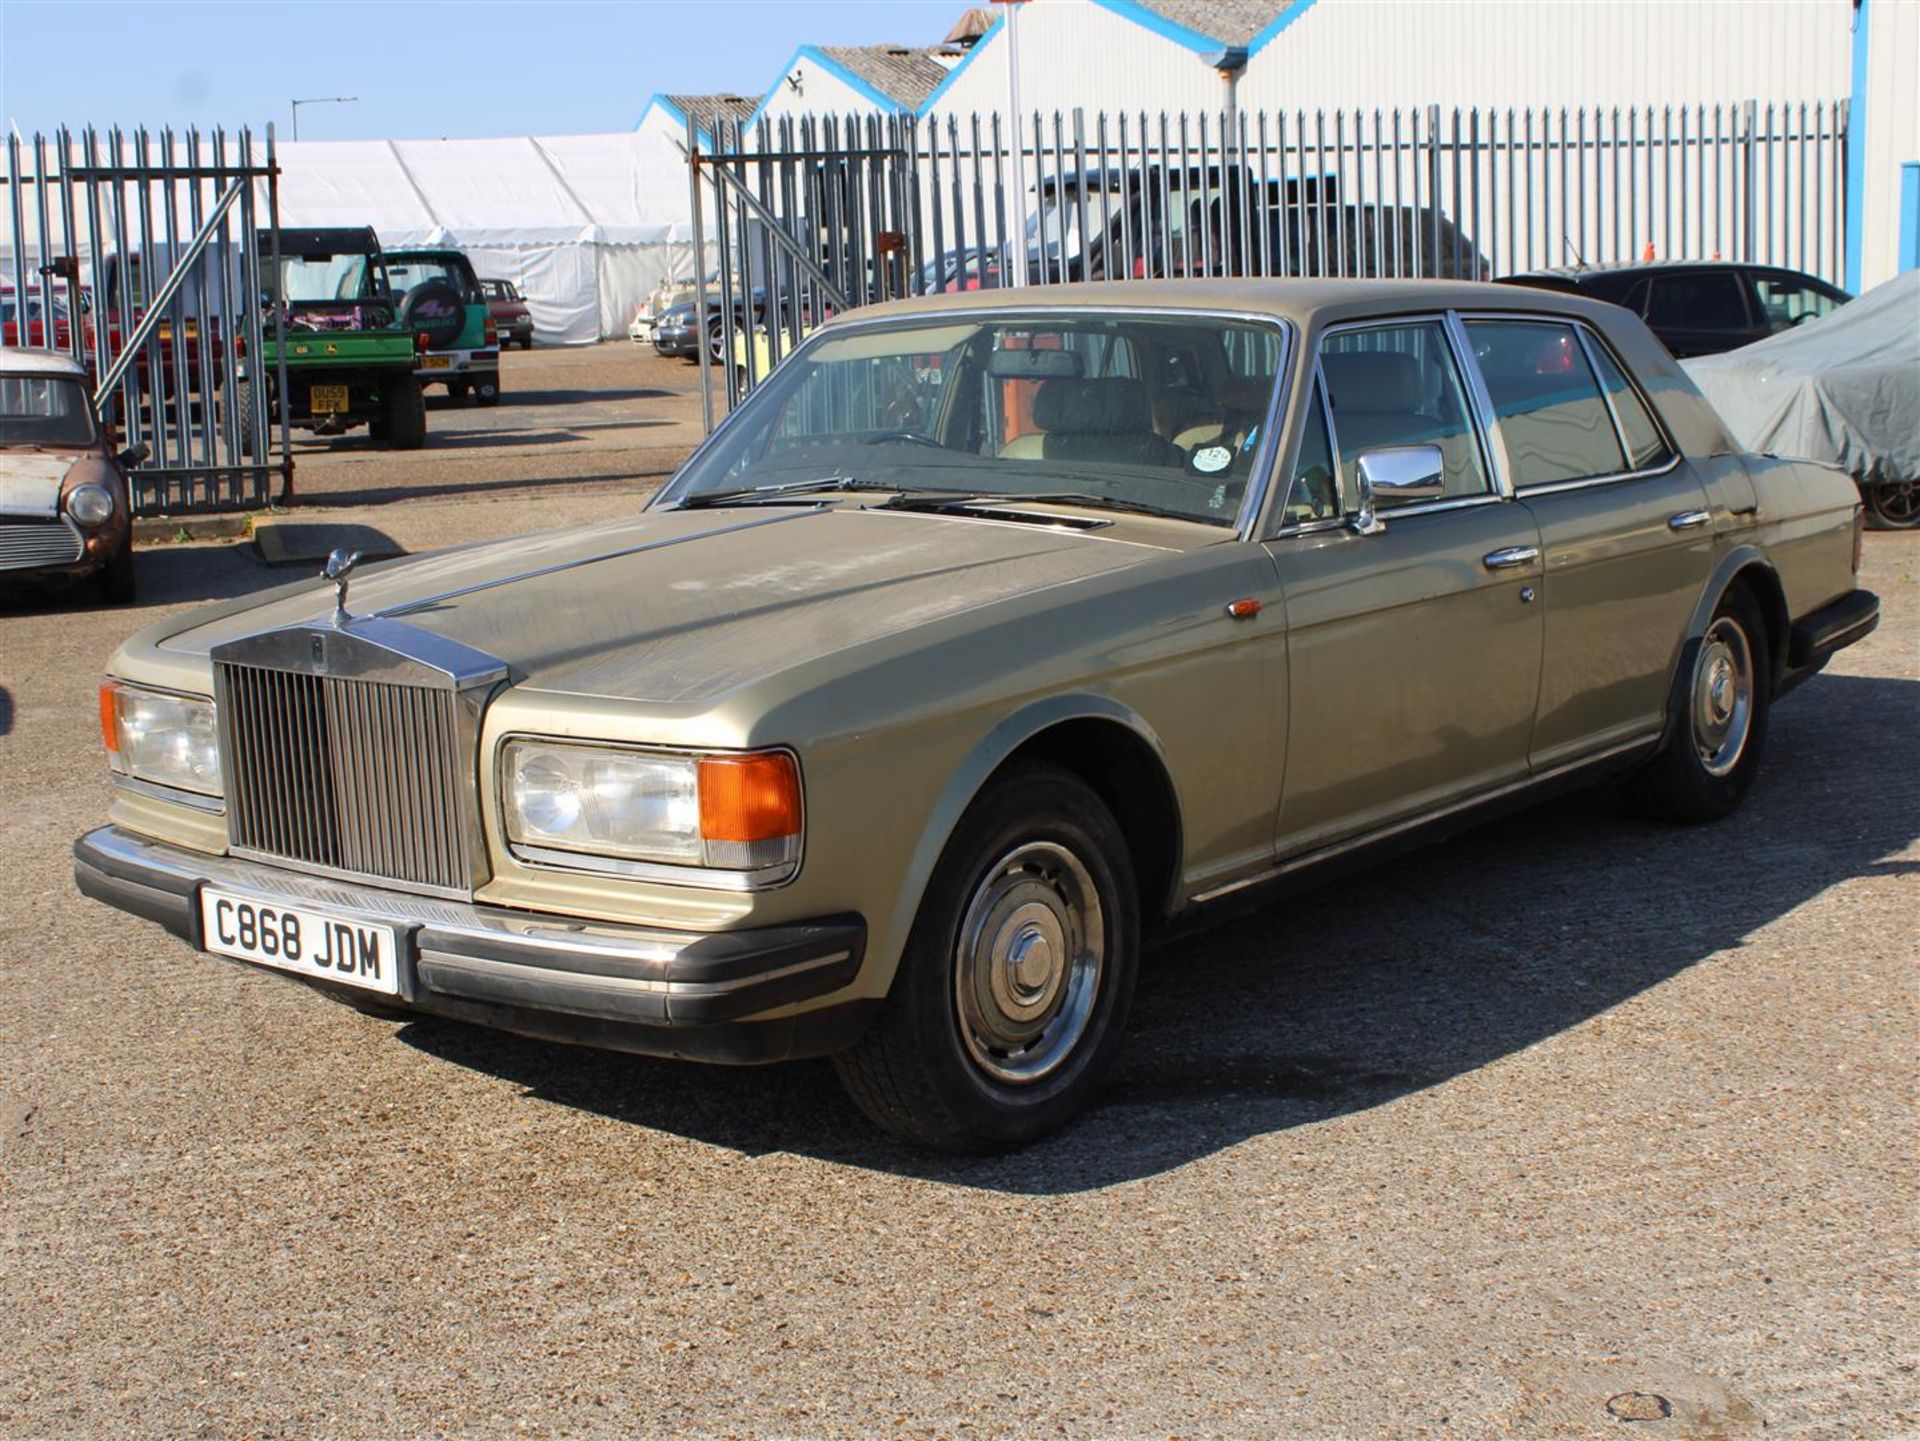 1985 Rolls Royce Silver Spirit - Image 3 of 24